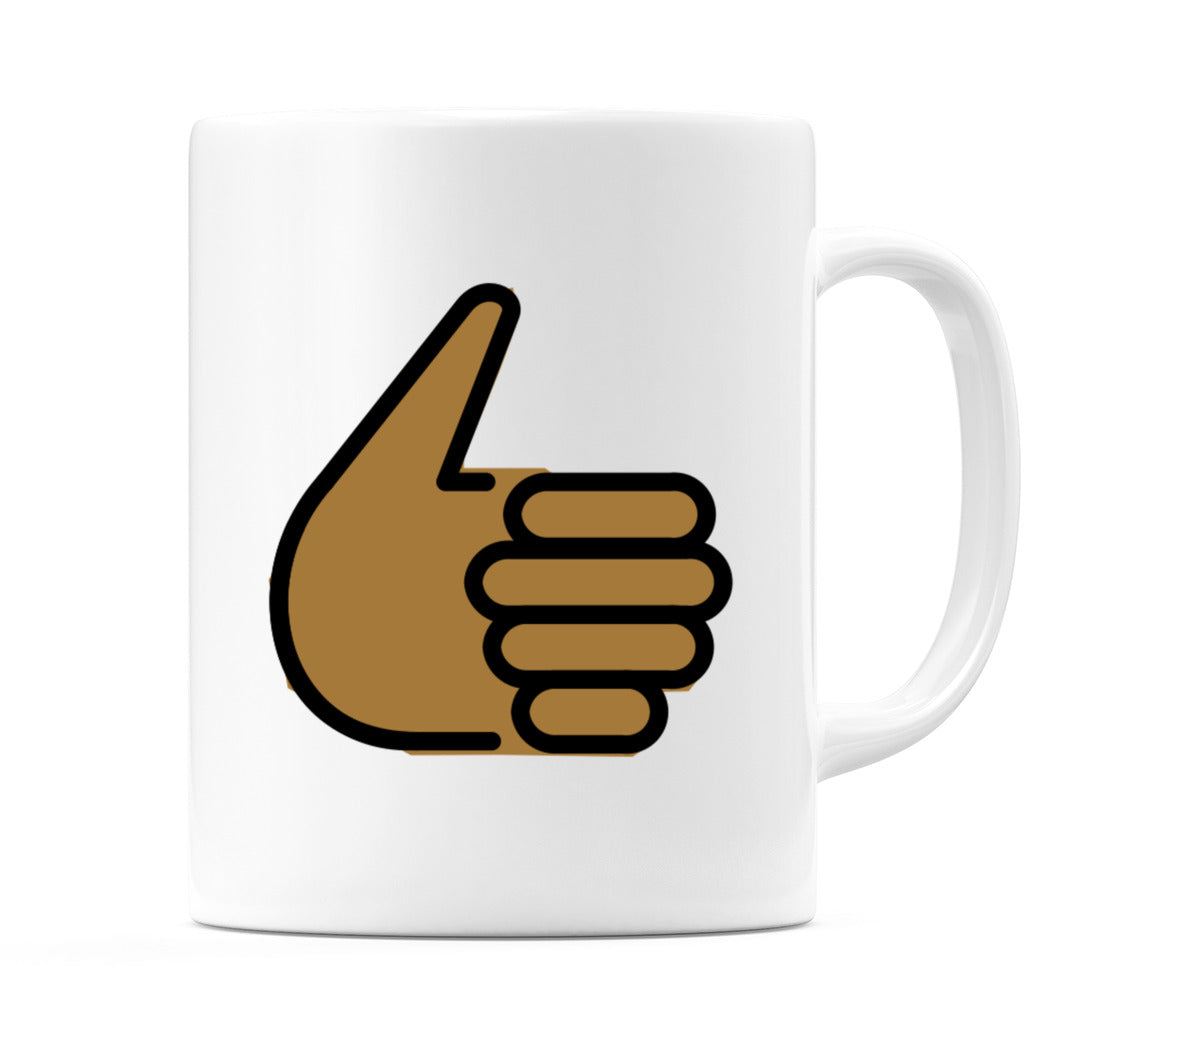 Thumbs Up: Medium-Dark Skin Tone Emoji Mug